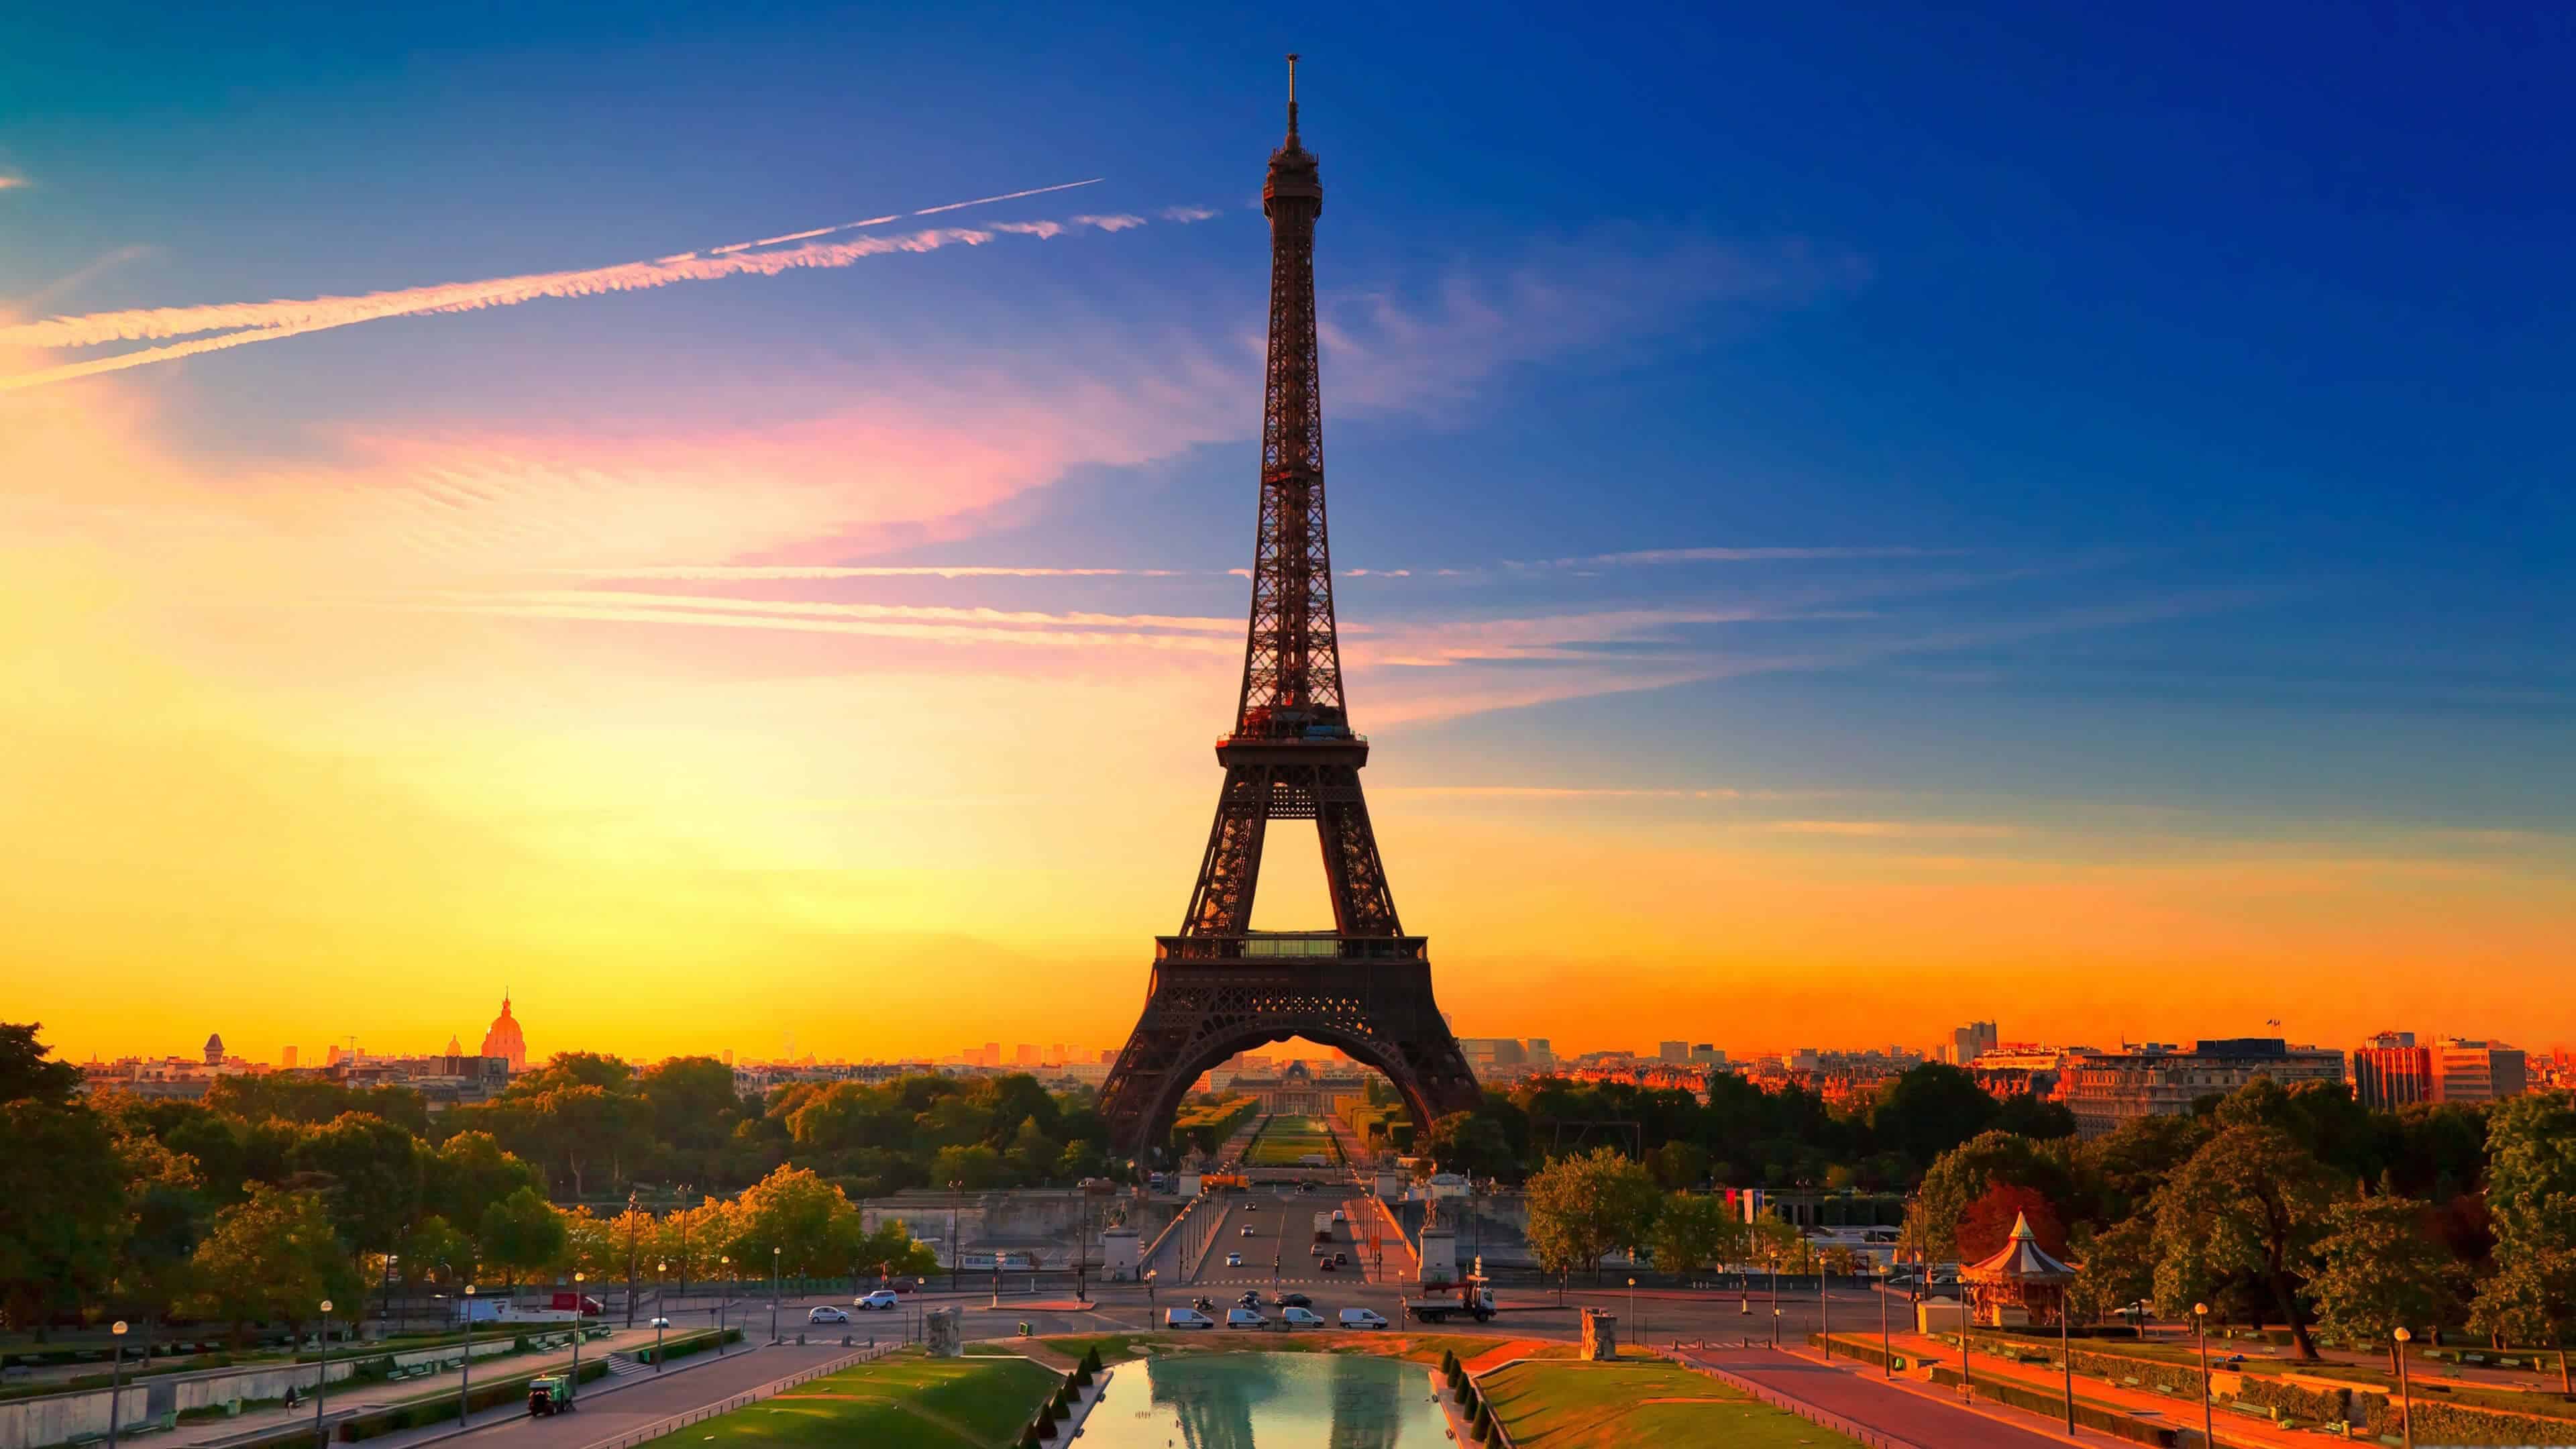 Eiffel Tower At Sunset Paris France UHD 4K Wallpaper Pixelz